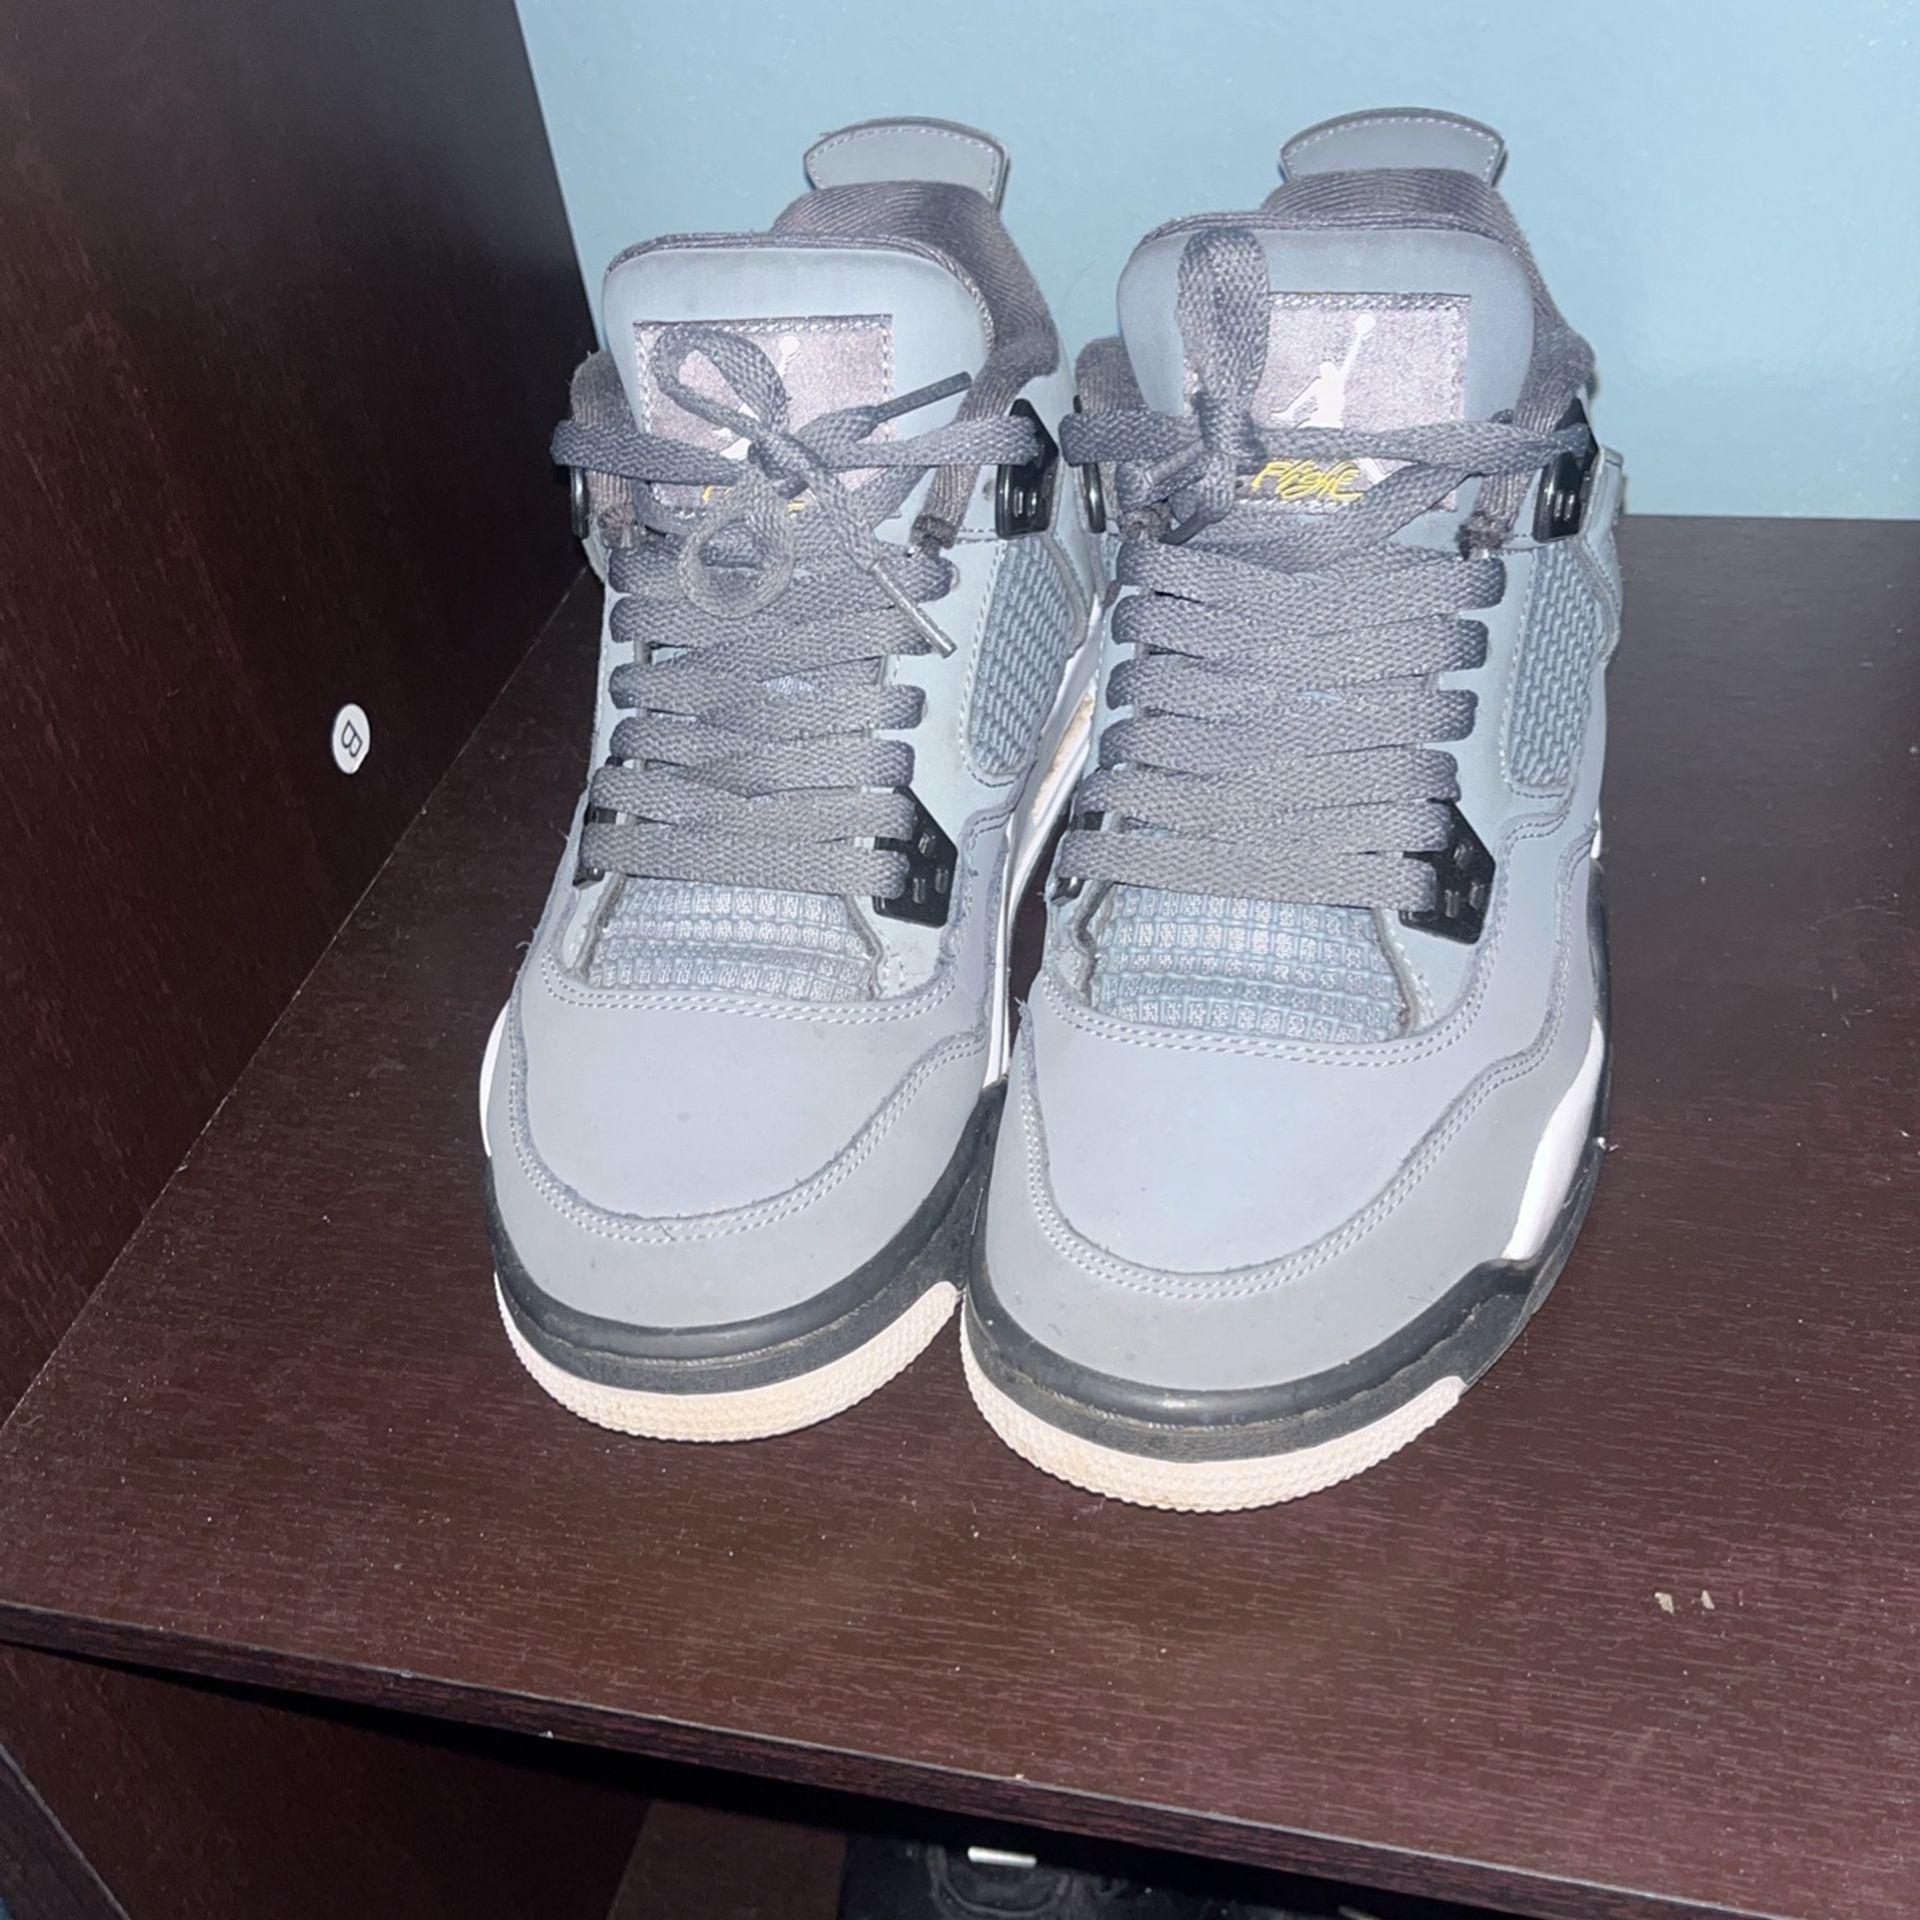 Jordan 4 Cool Greys